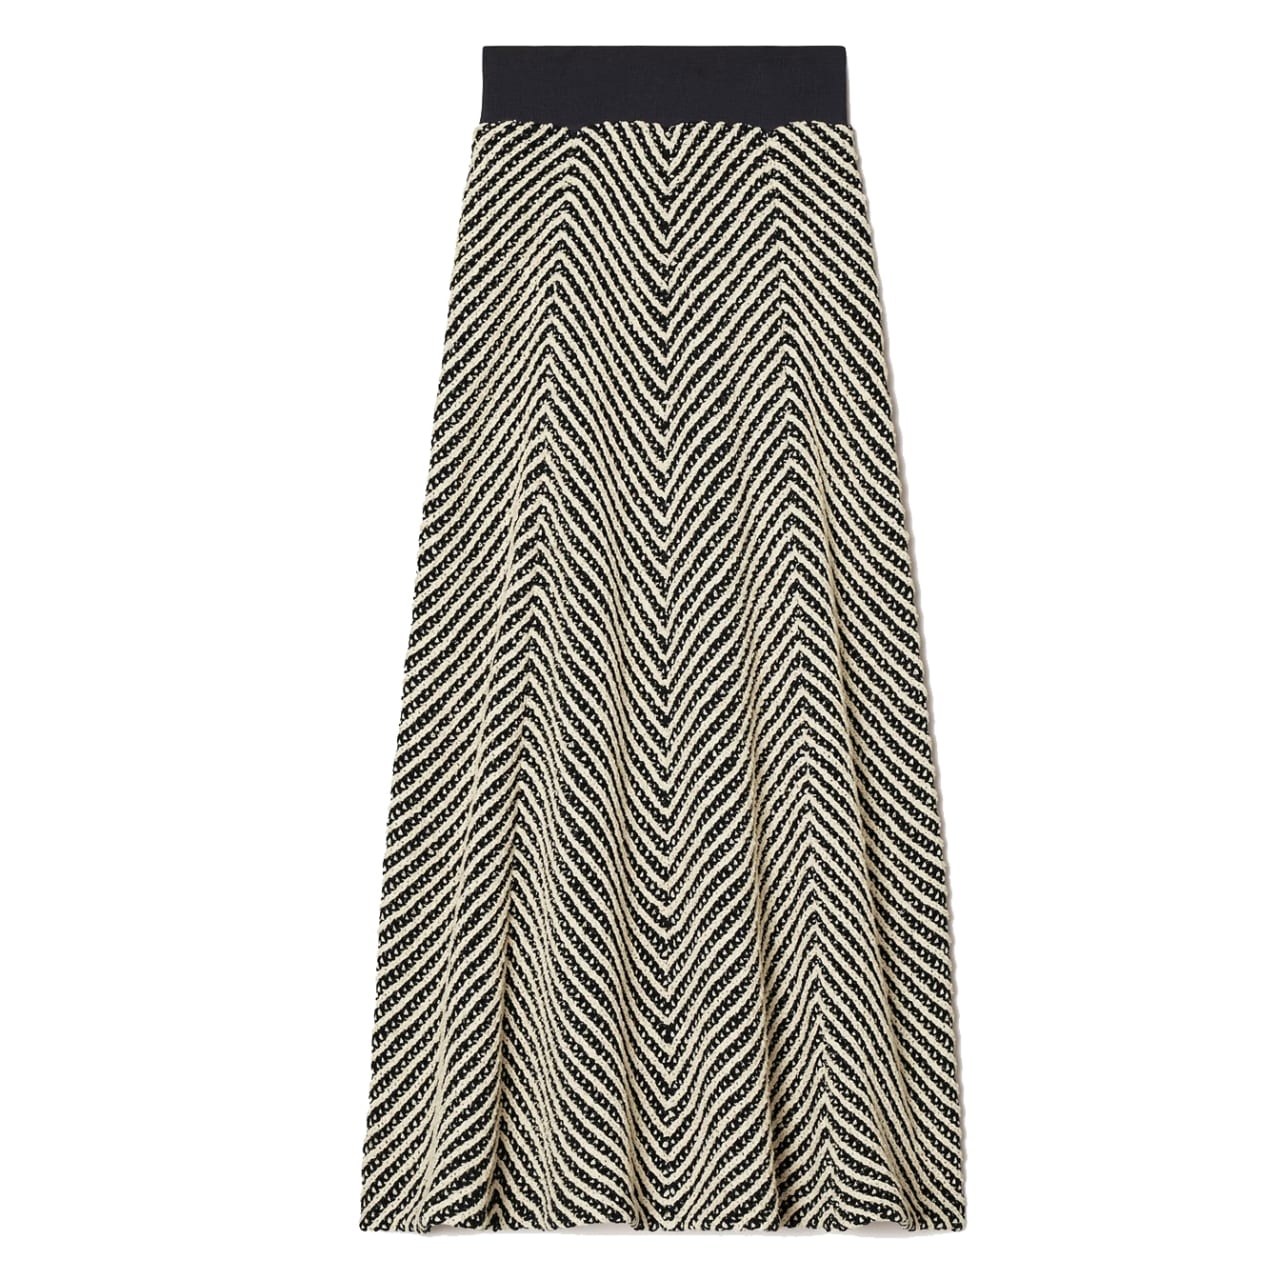 Chevron Stripe Skirt